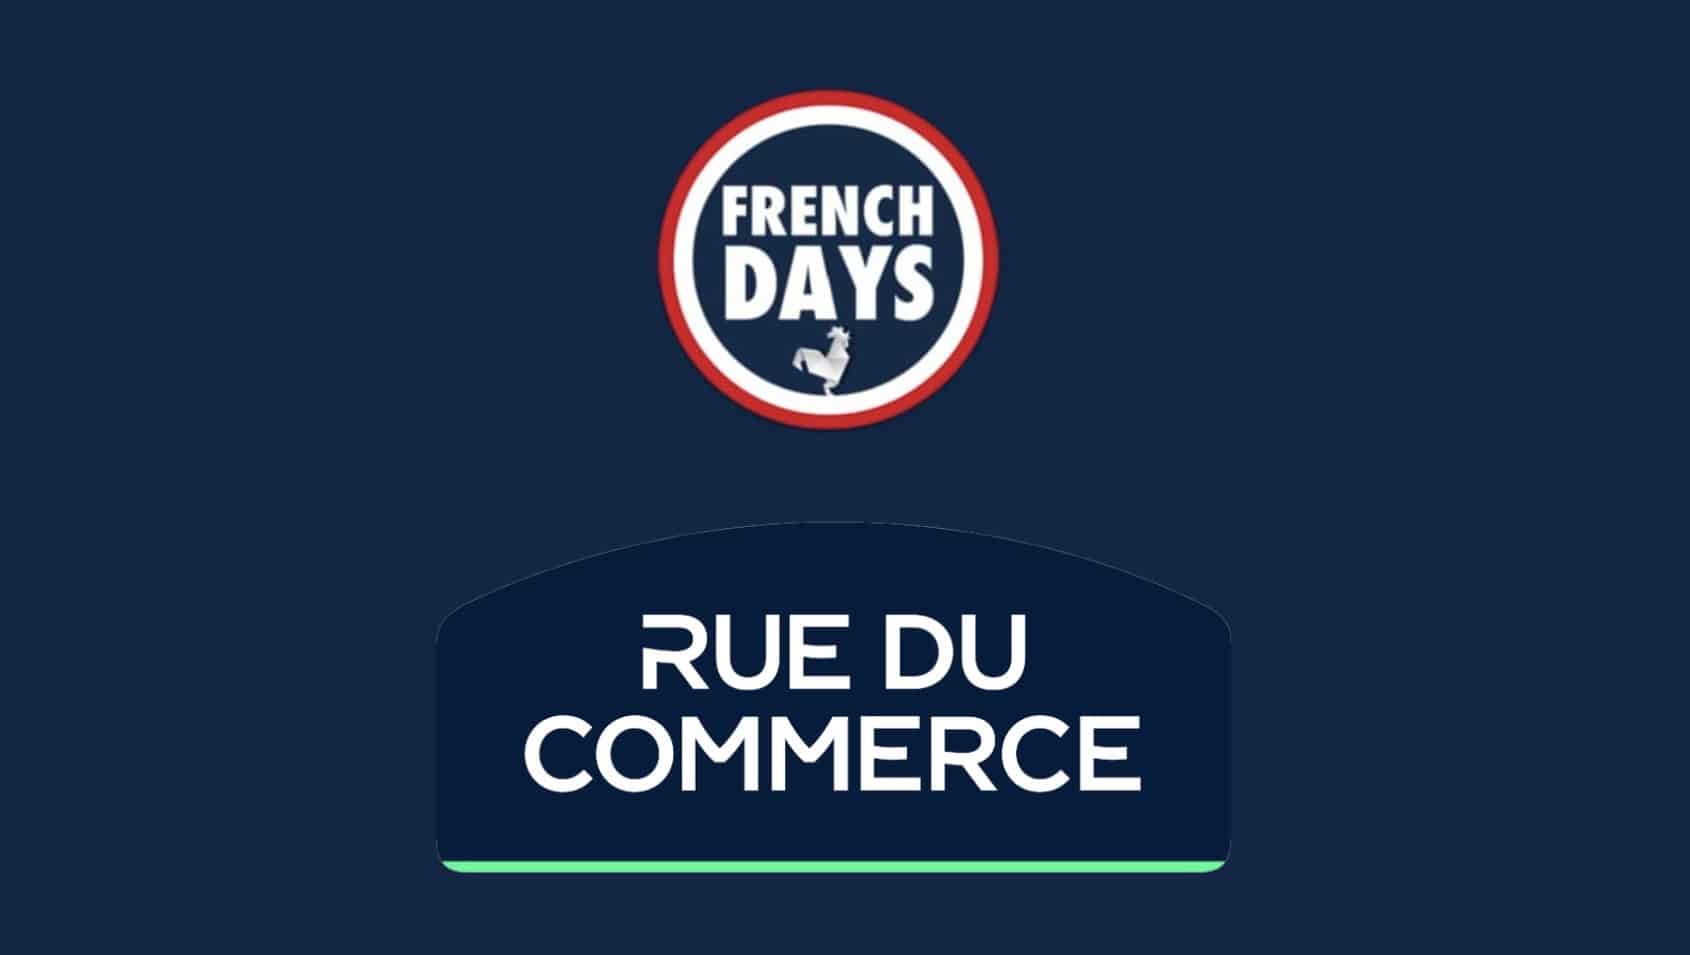 French Days Rue du Commerce